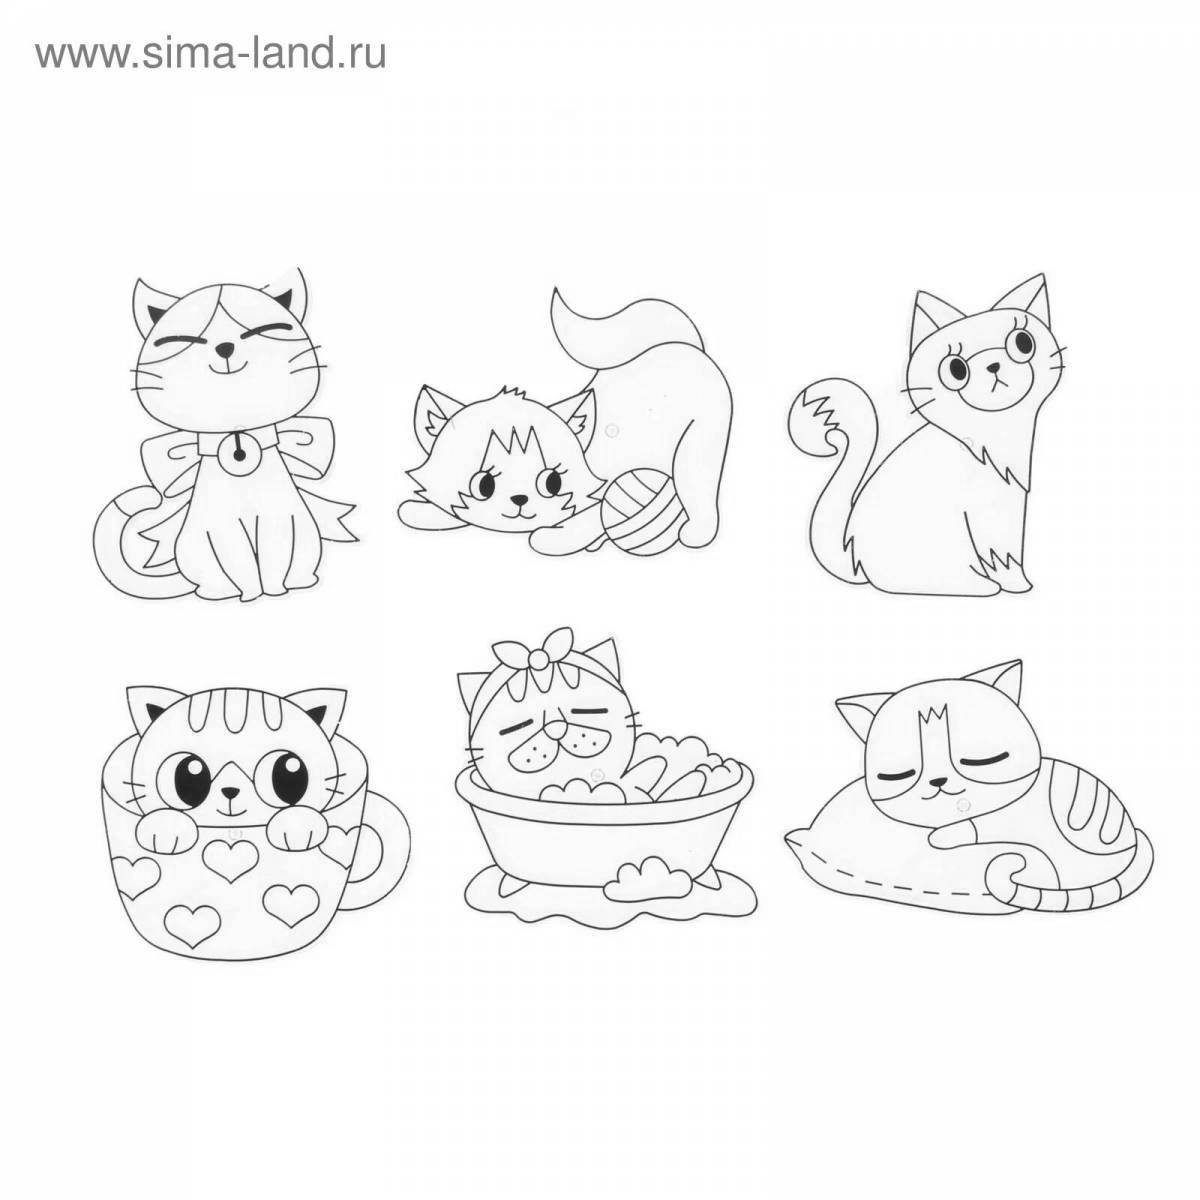 Раскраска snuggly-cuddly kittens